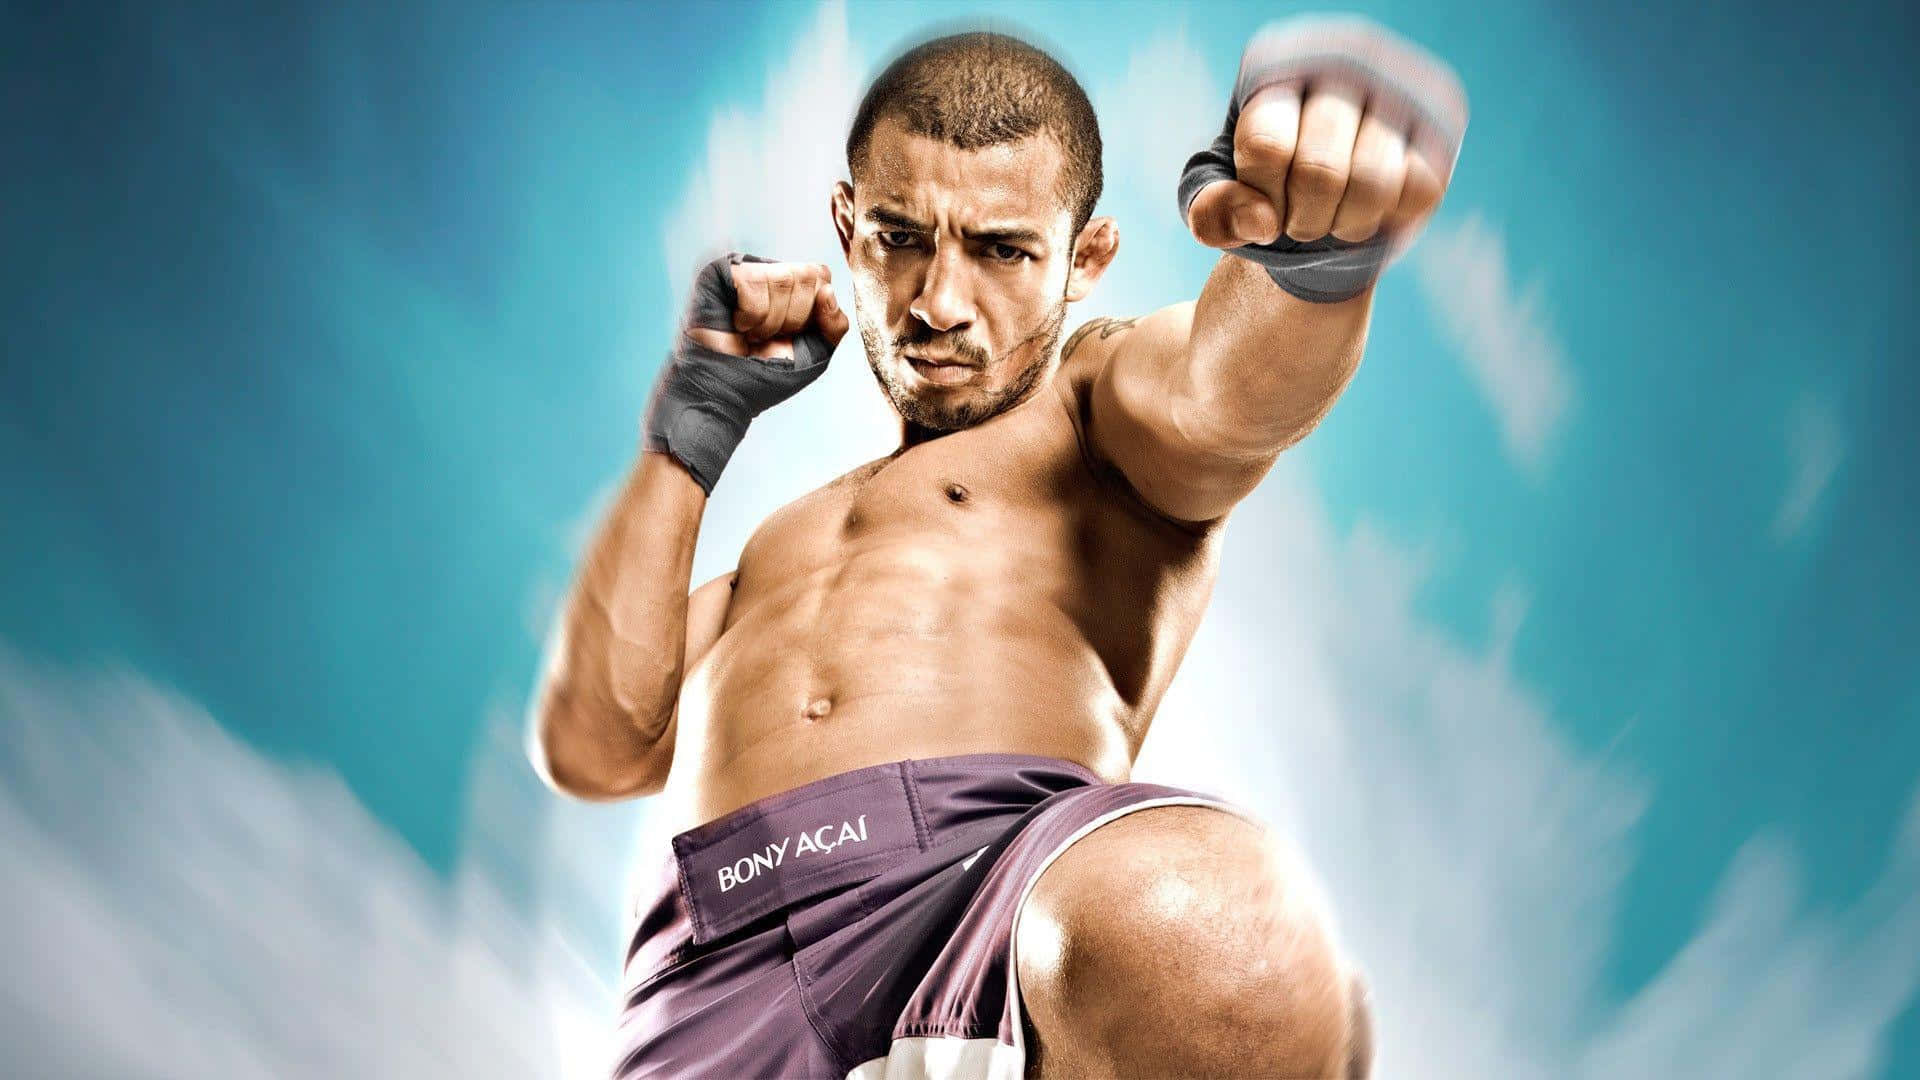 José Aldo Fearless Brazilian UFC Fighter Art Wallpaper